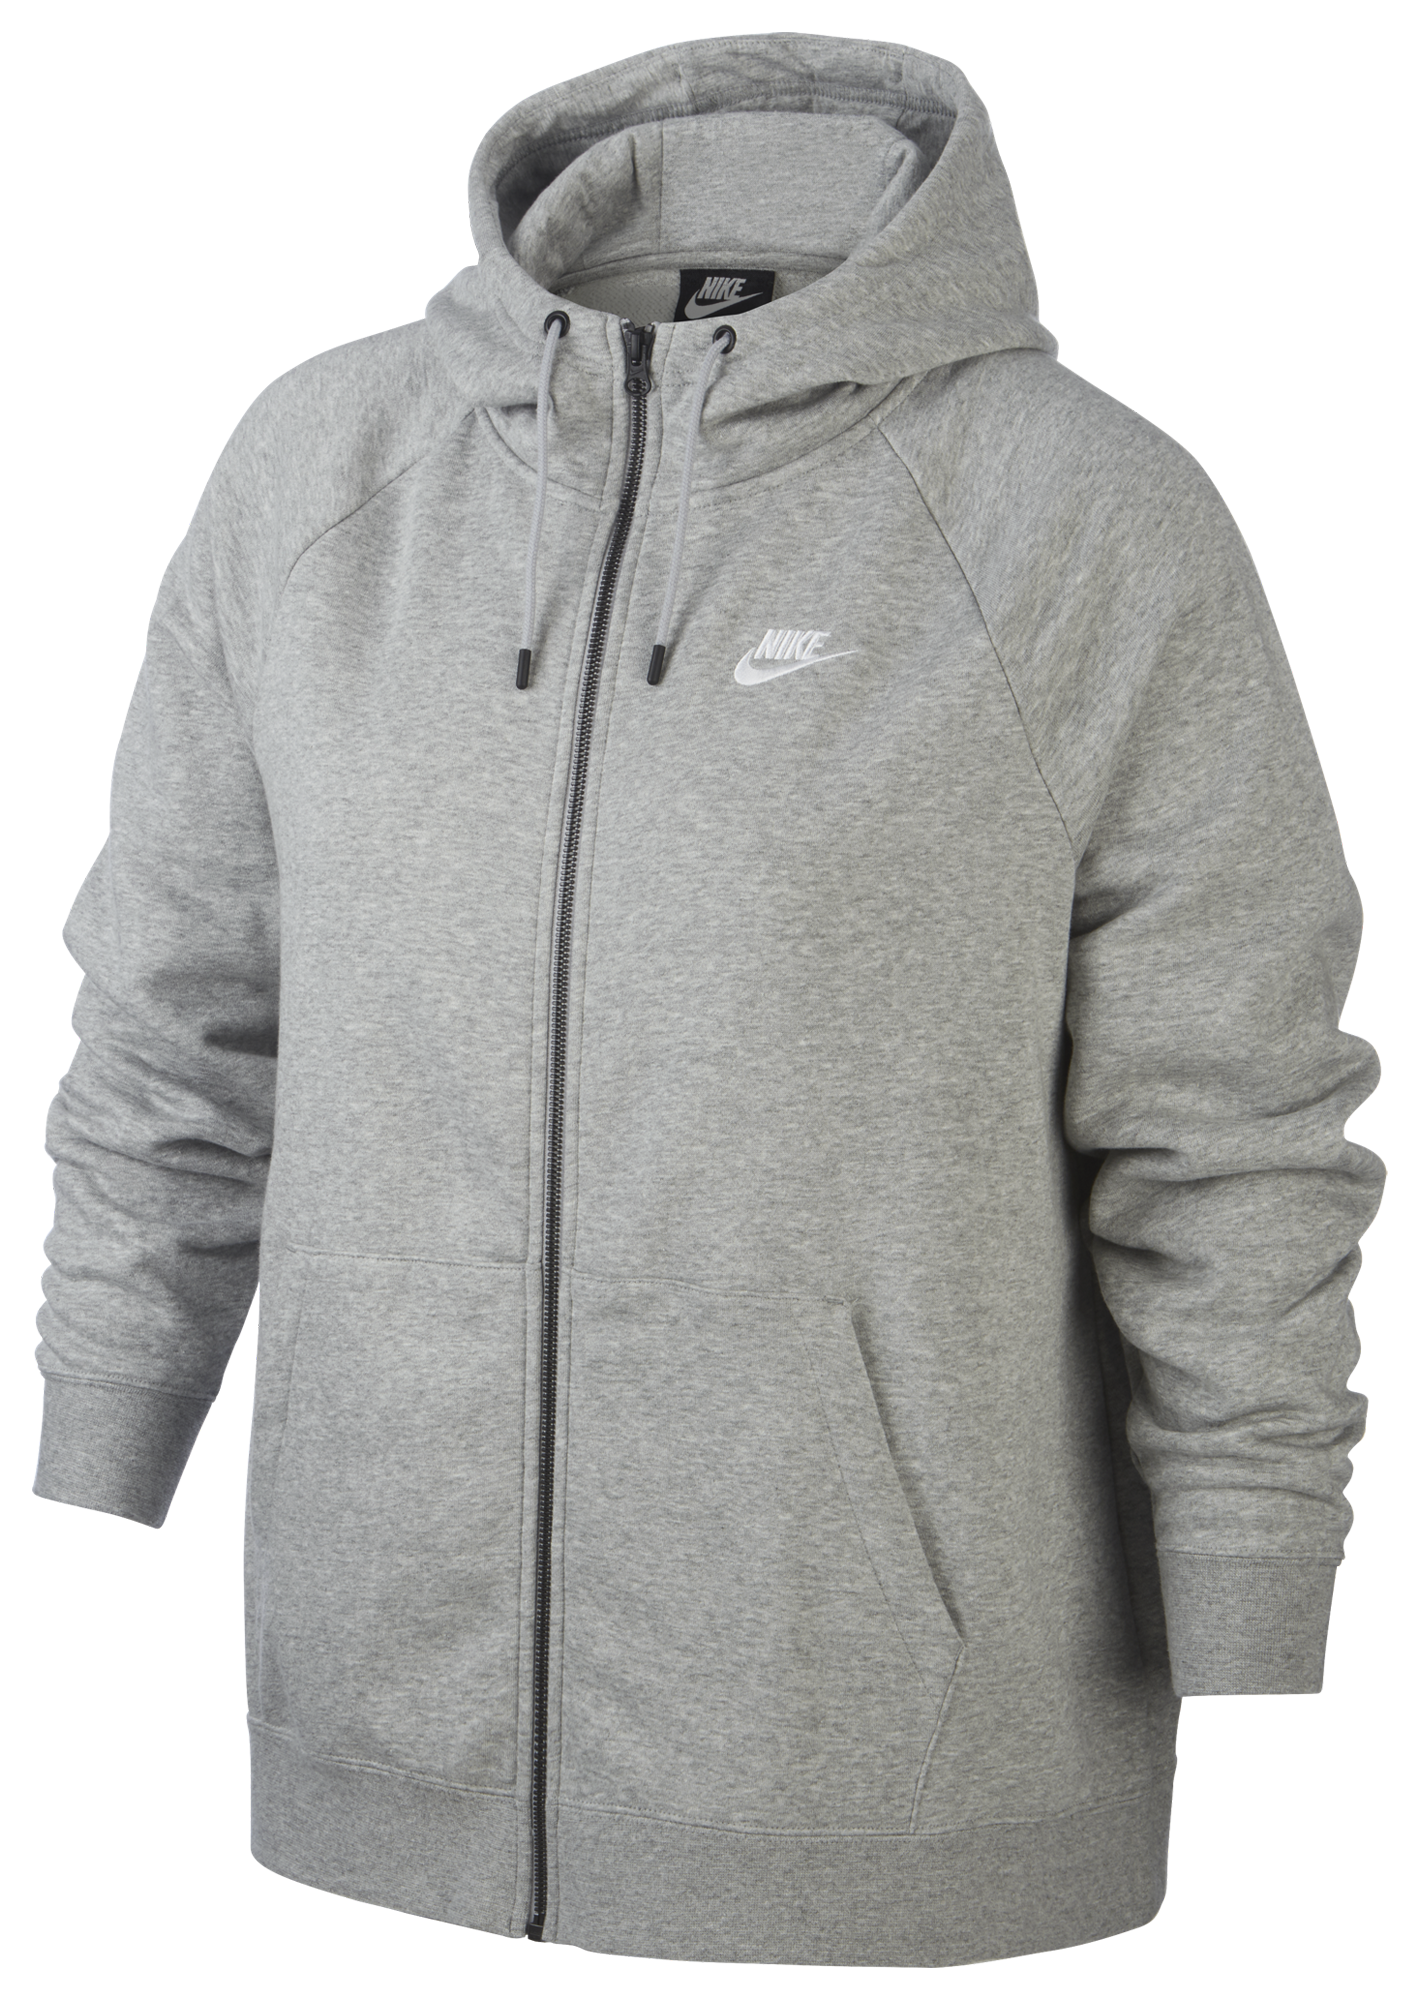 light gray nike zip up hoodie